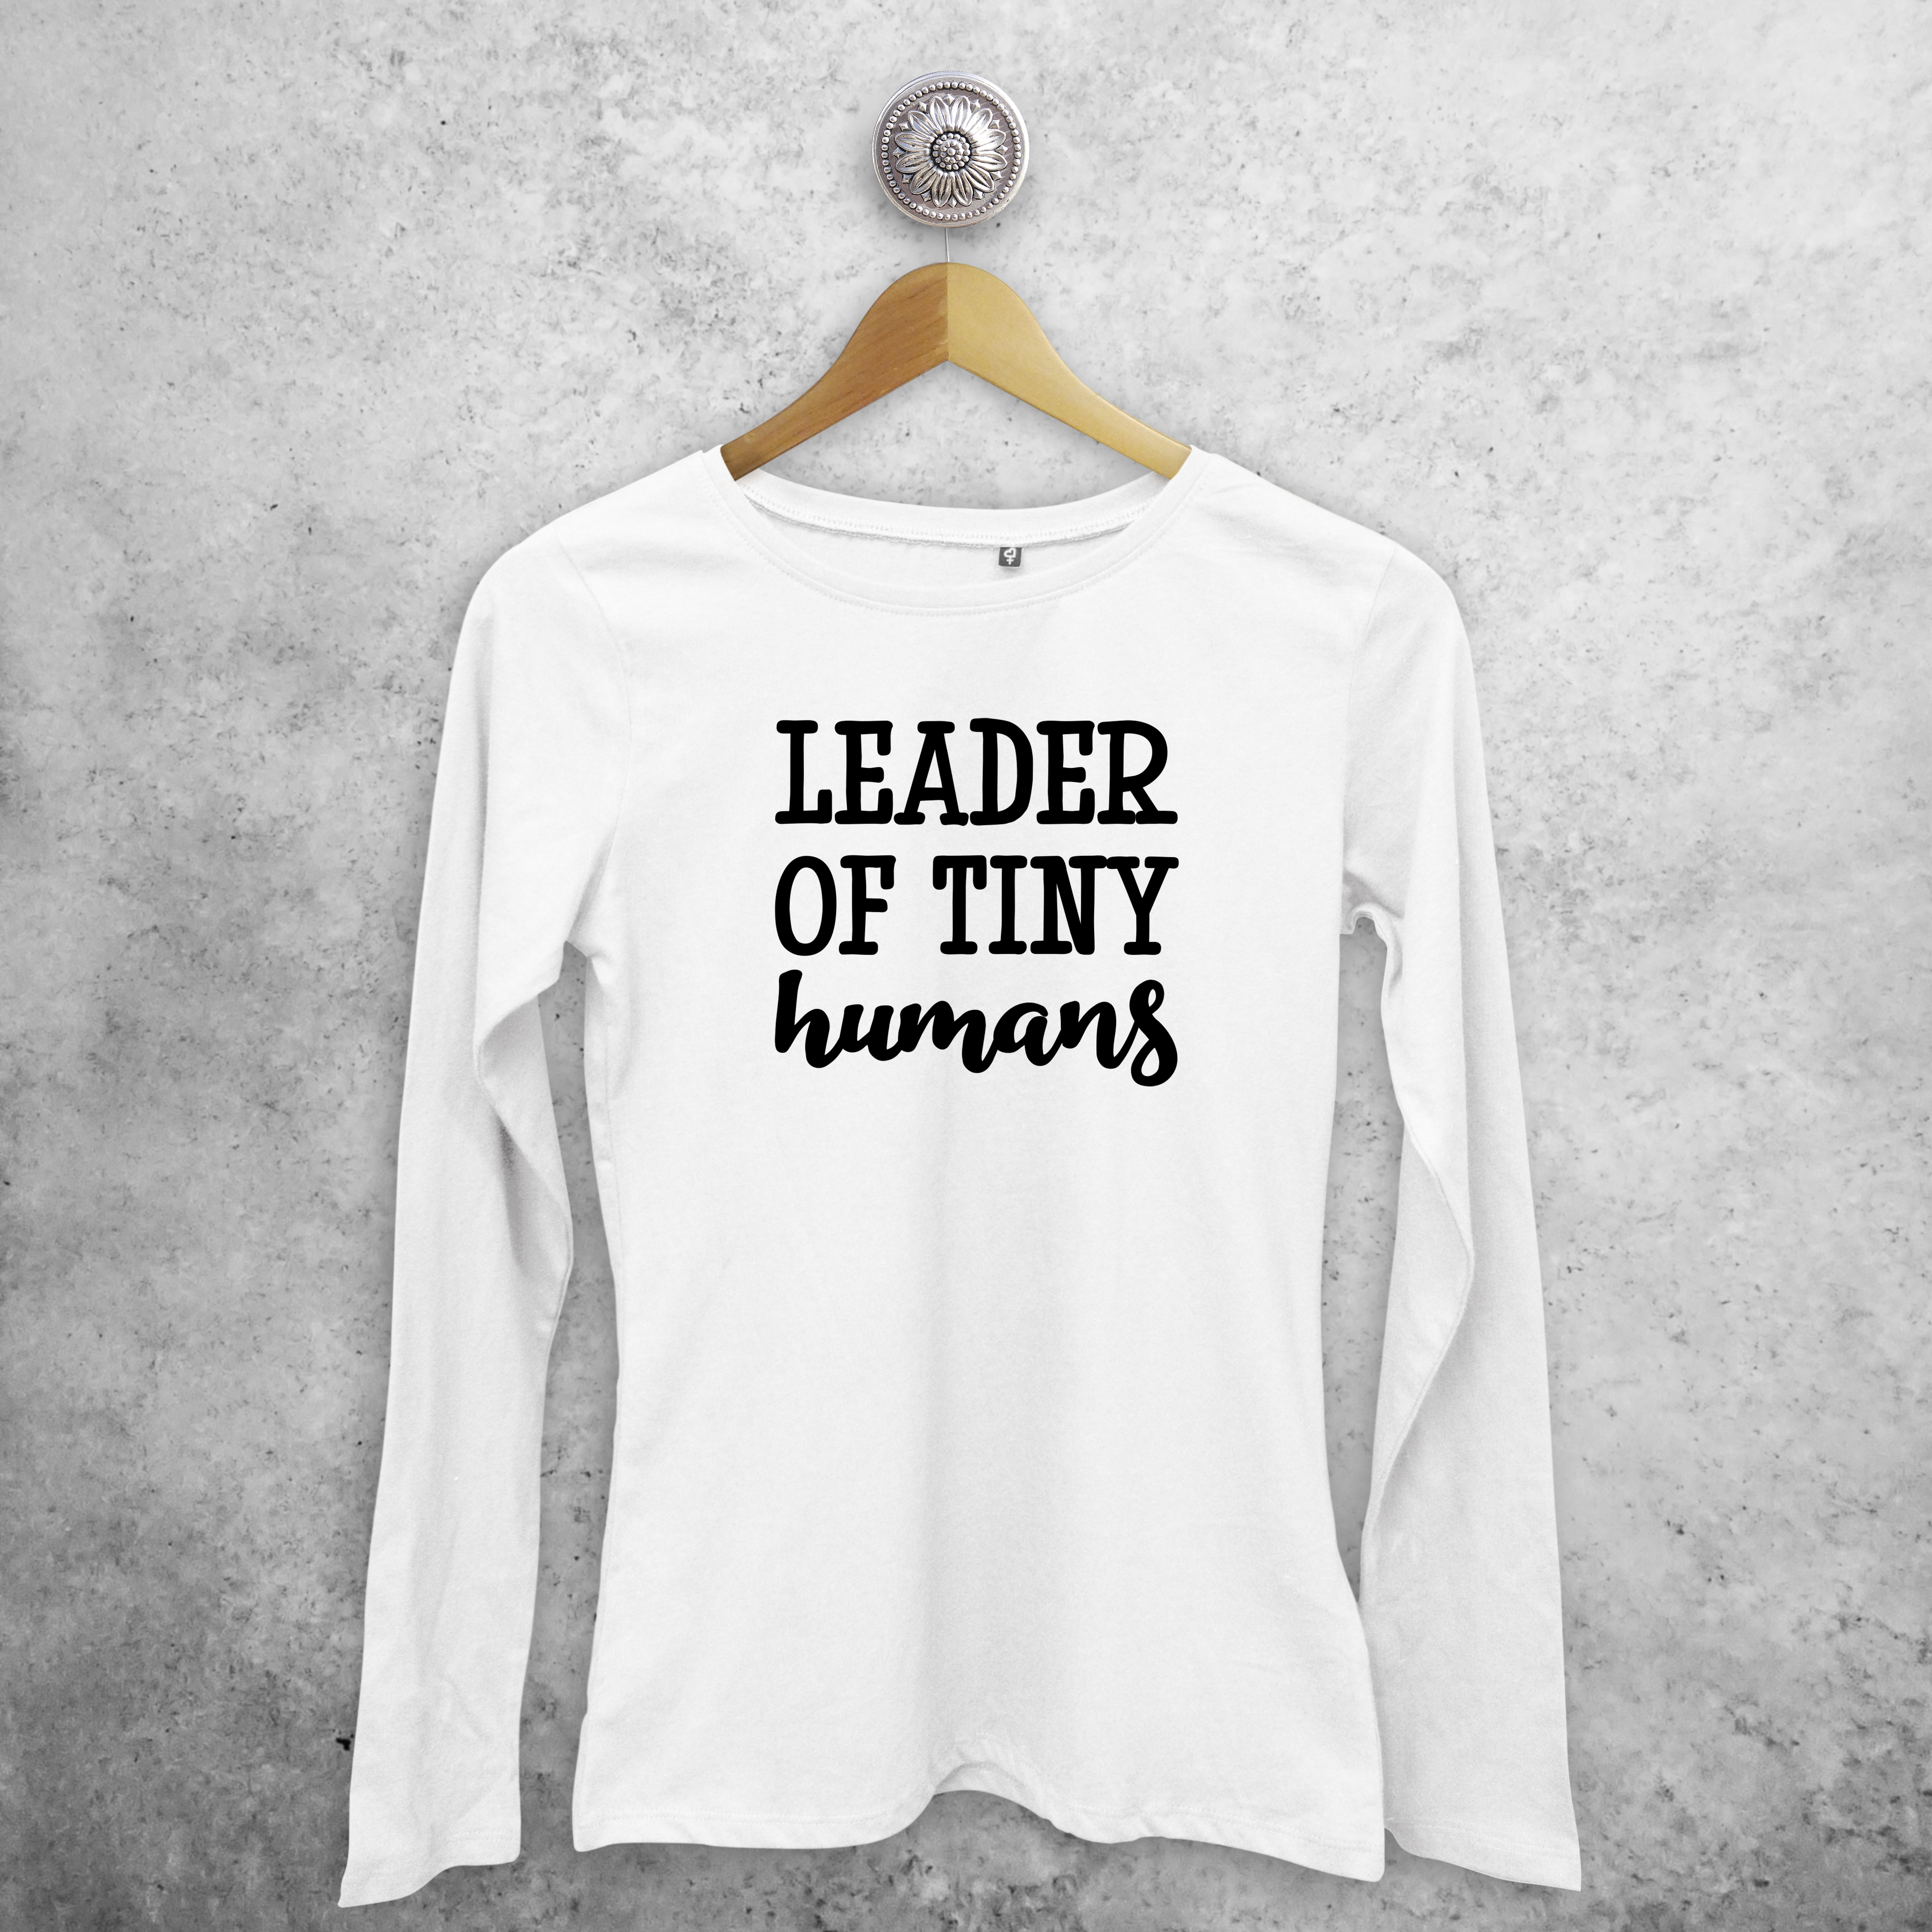 'Leader of tiny humans' adult longsleeve shirt